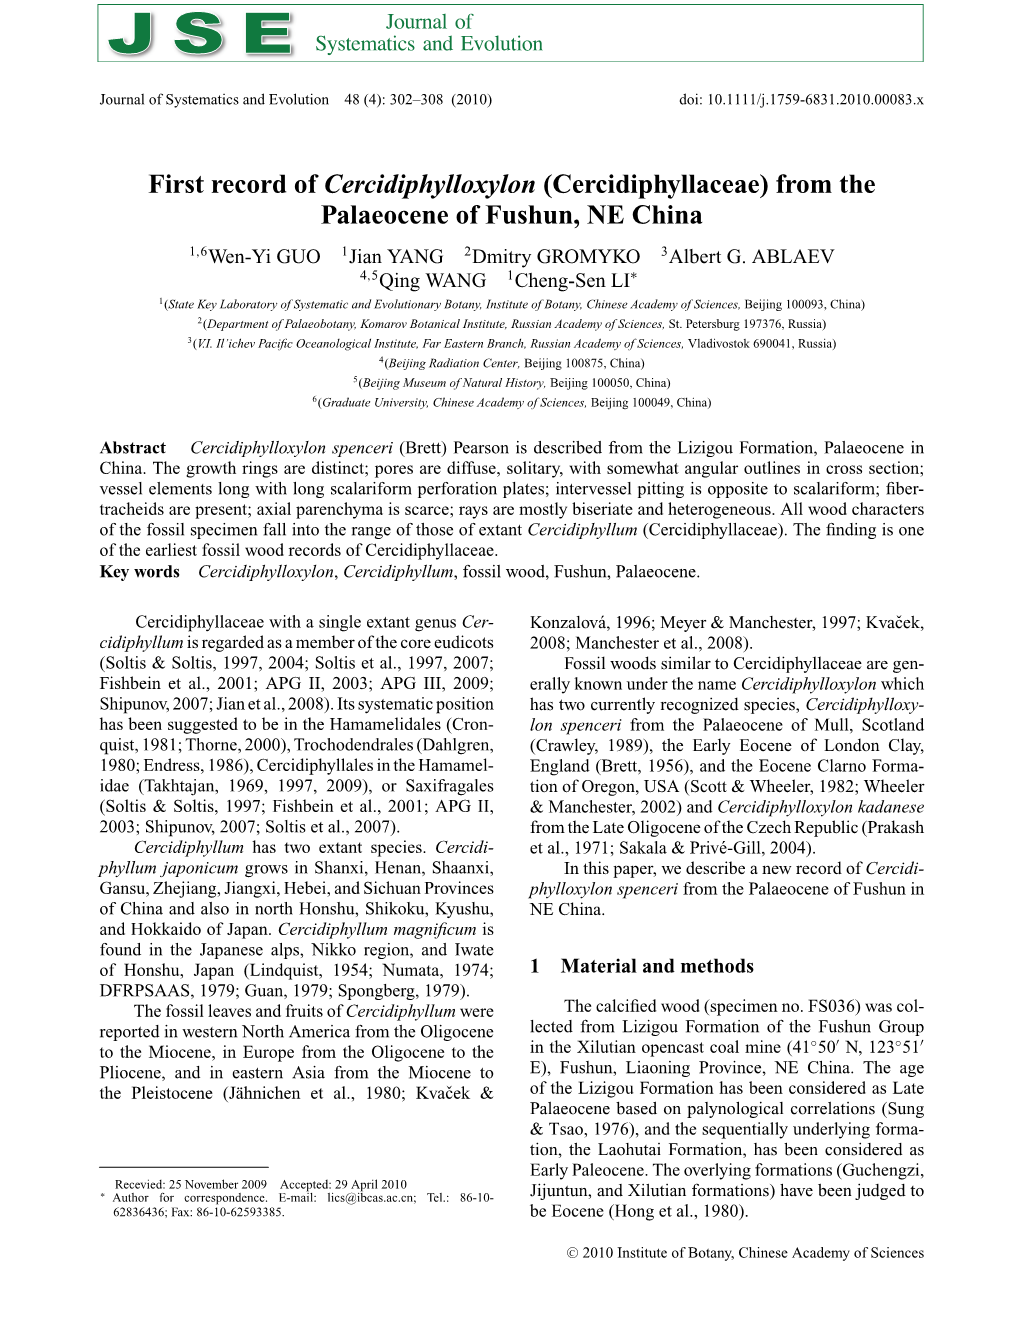 First Record of Cercidiphylloxylon (Cercidiphyllaceae) from the Palaeocene of Fushun, NE China 1,6Wen-Yi GUO 1Jian YANG 2Dmitry GROMYKO 3Albert G